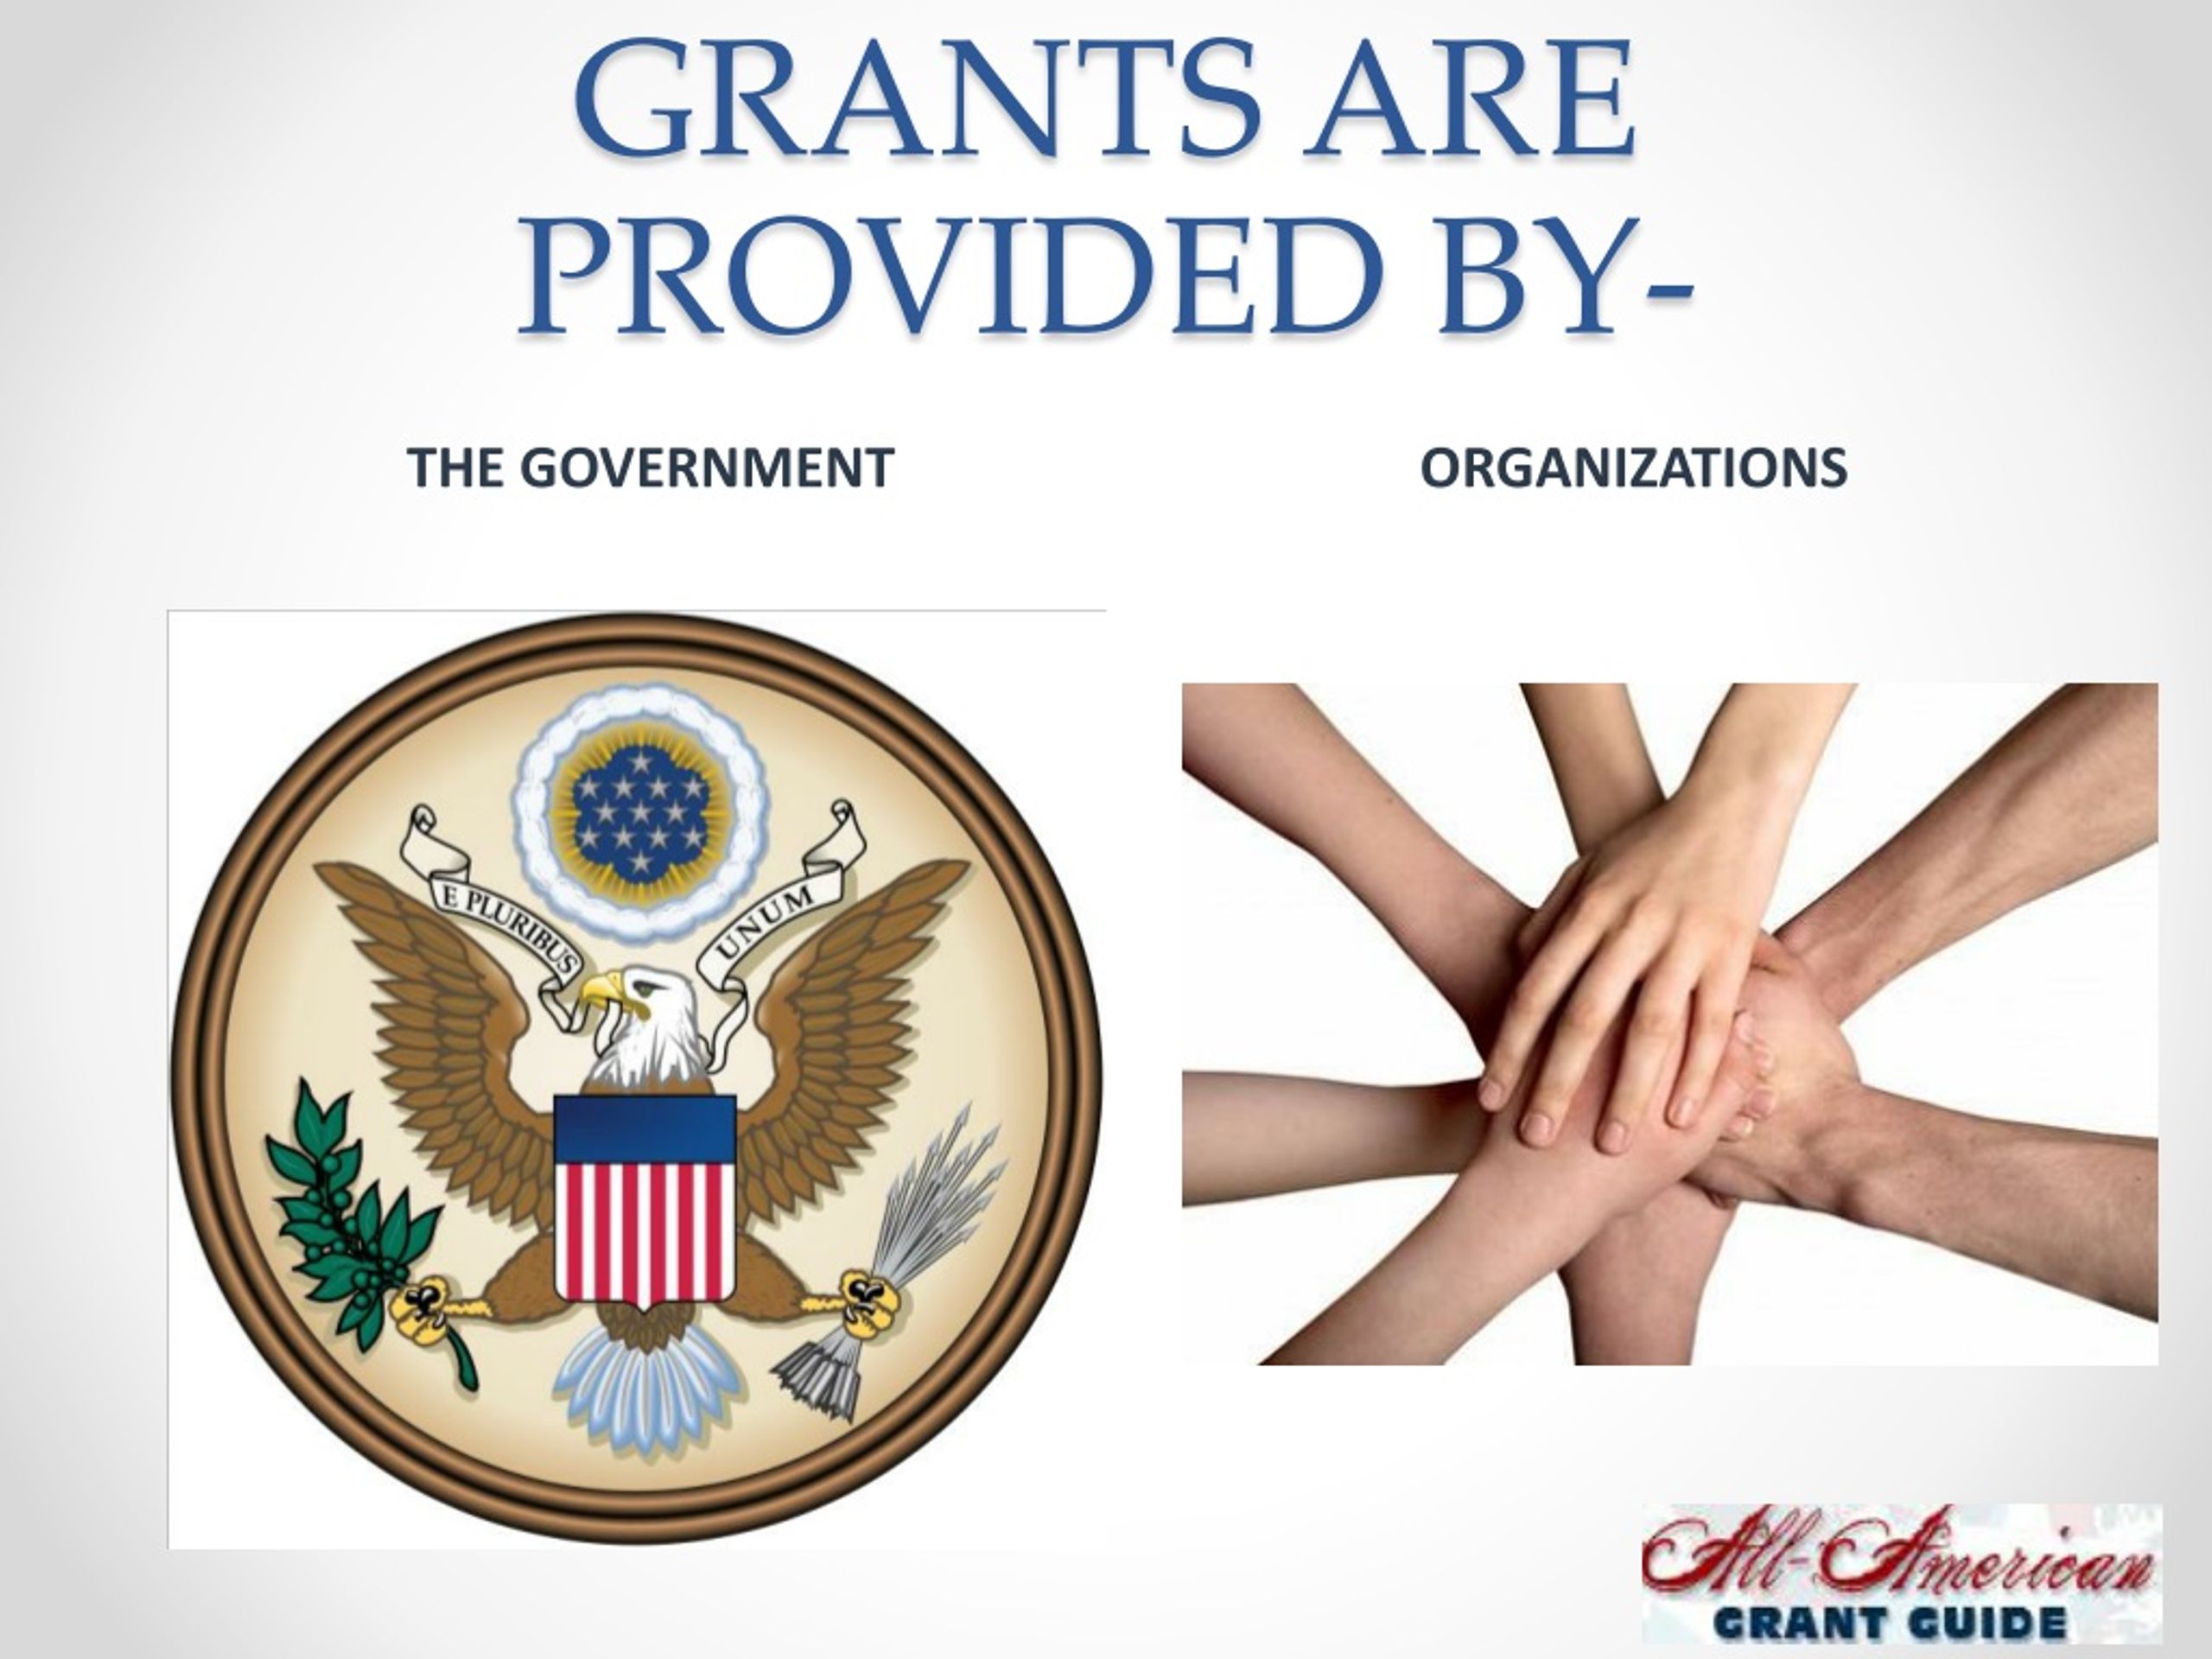 presentation of government grants